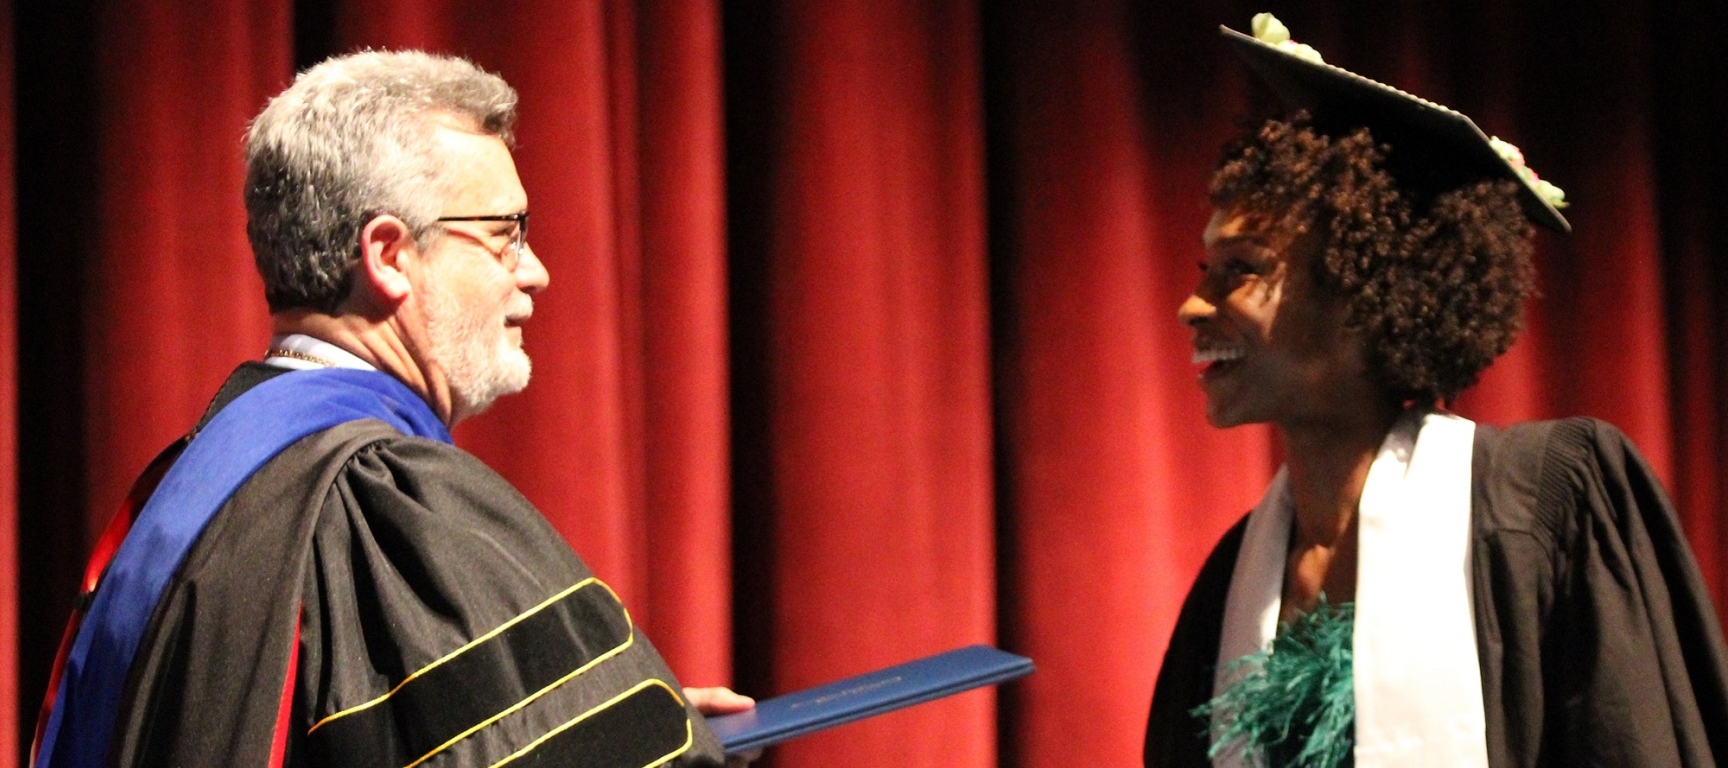 President Jim Reynolds presenting student with diploma